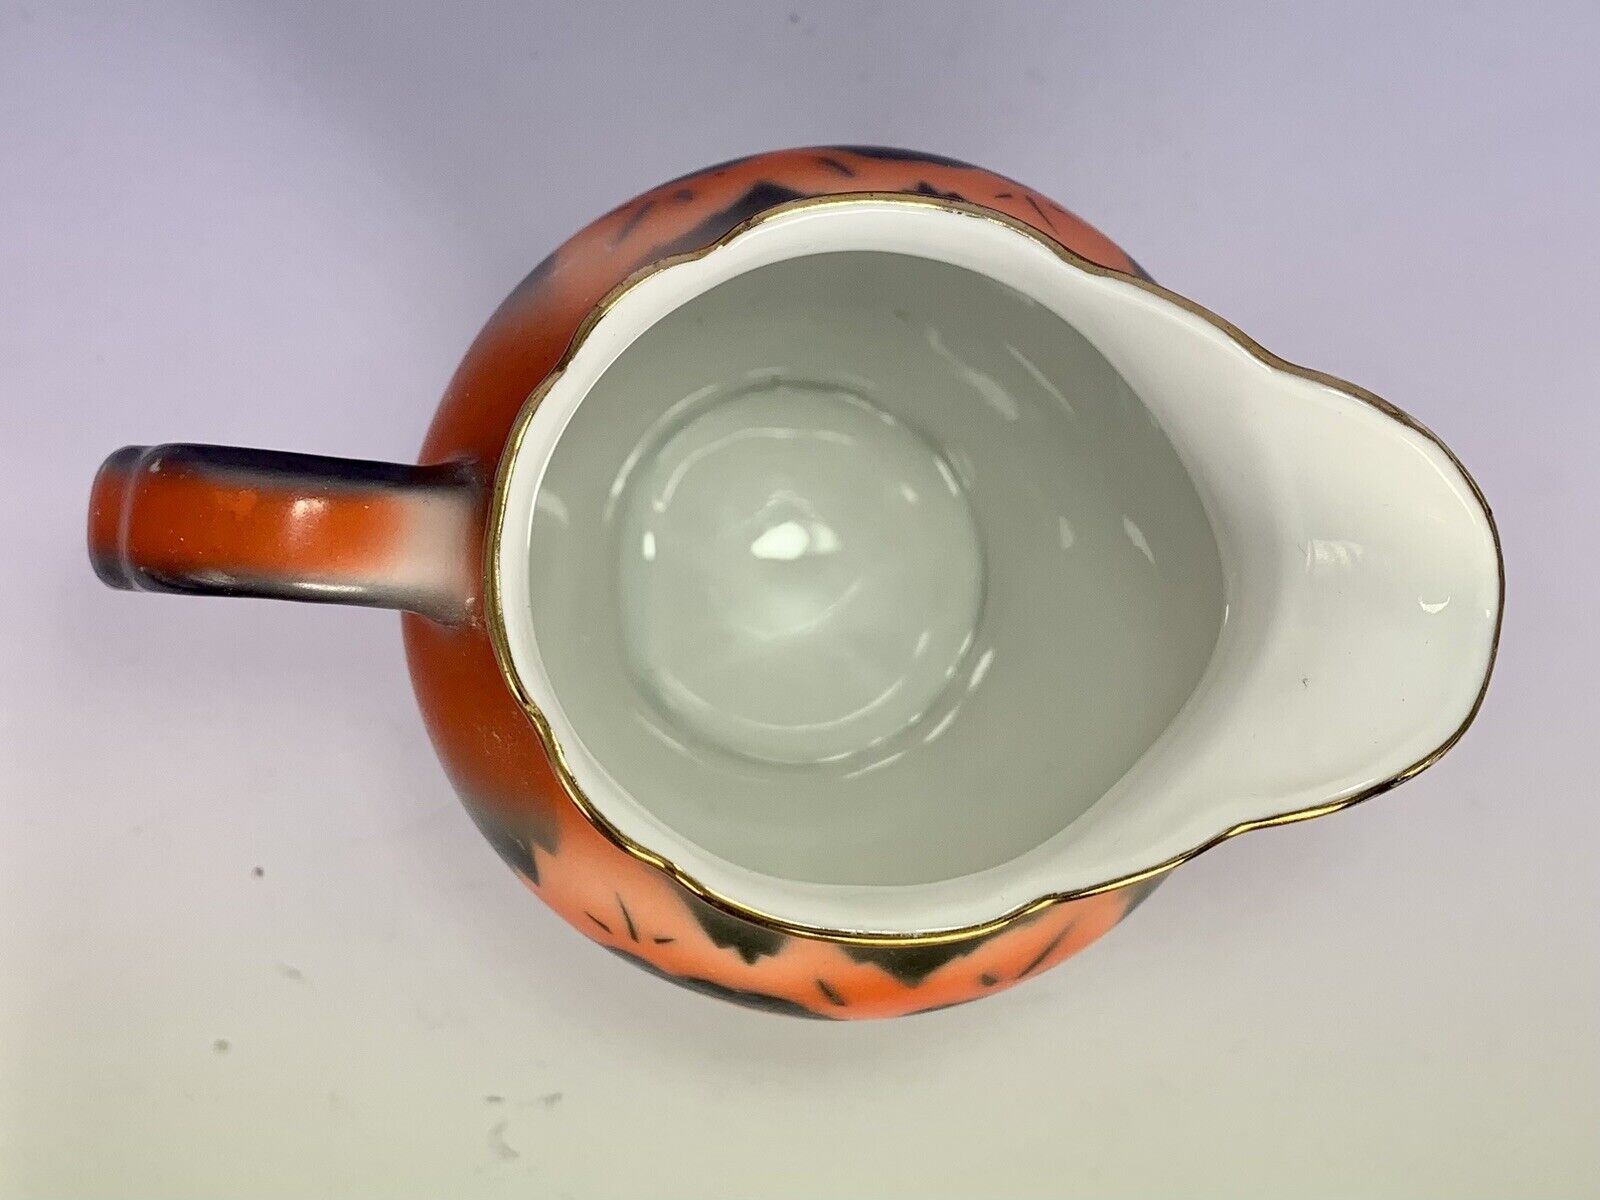 Vtg Victoria China porcelain bowl and cream pitcher orange black Czechoslovakia